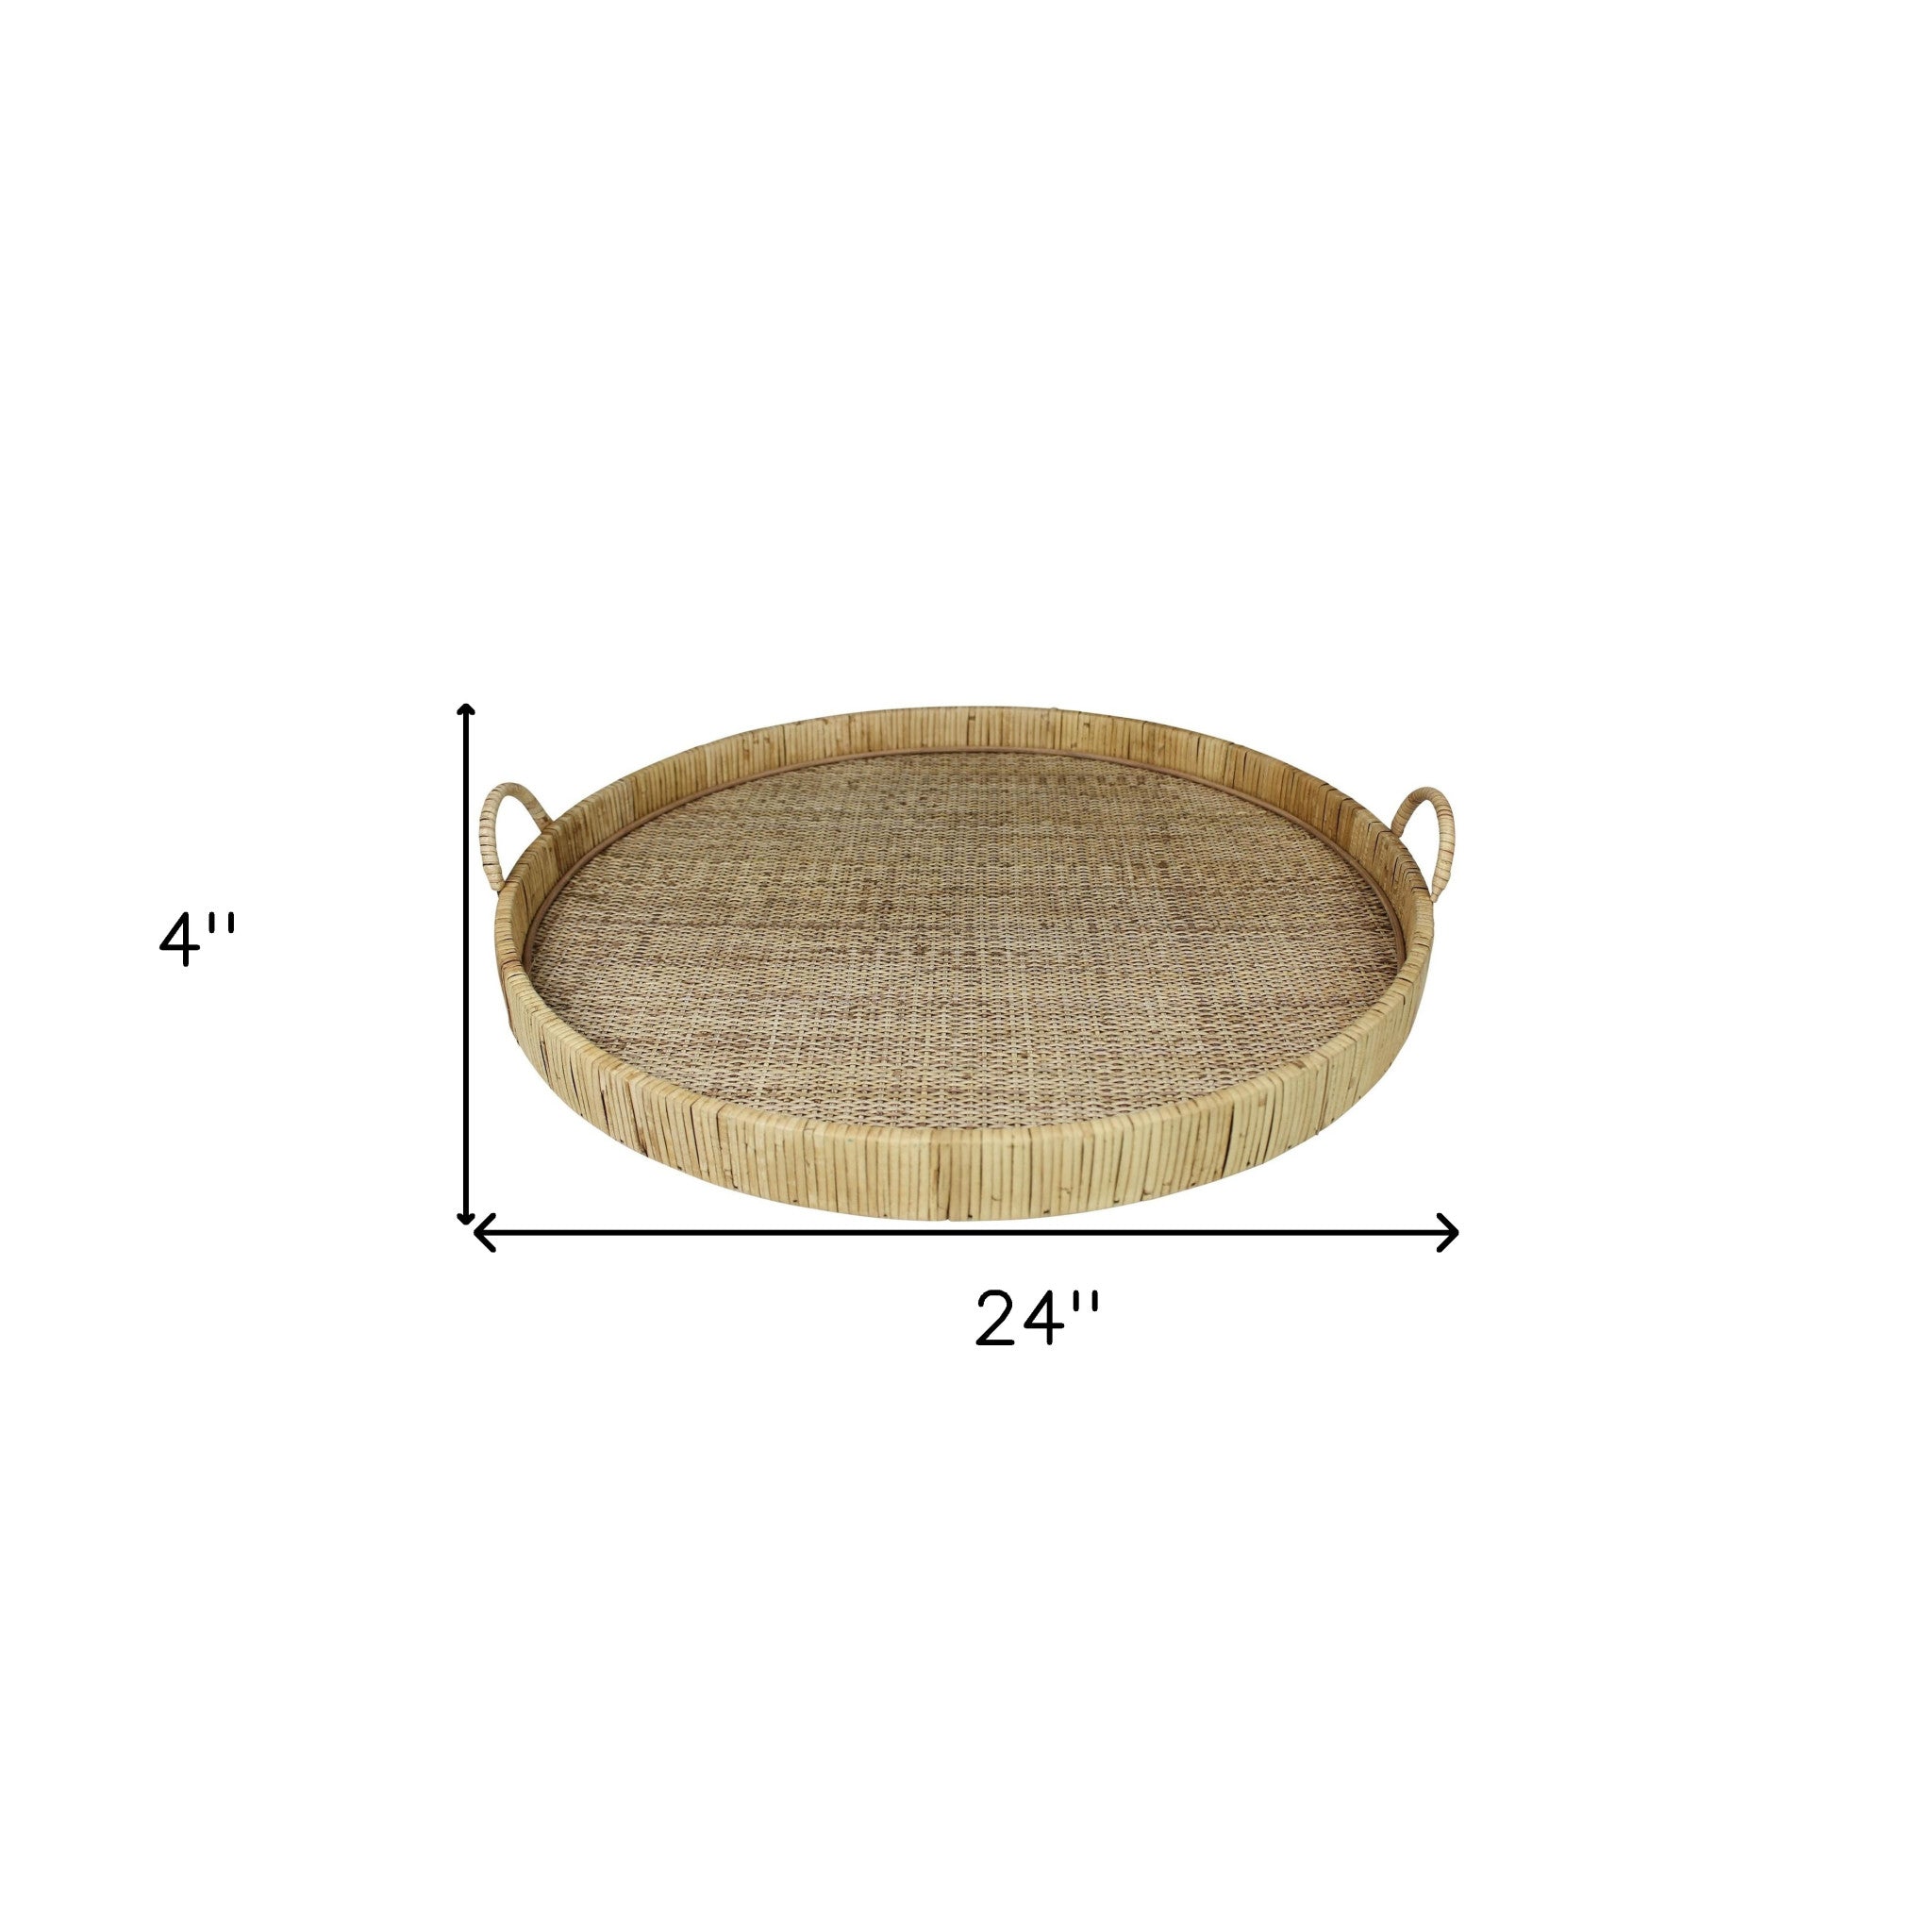 Jumbo Bamboo Round Tray